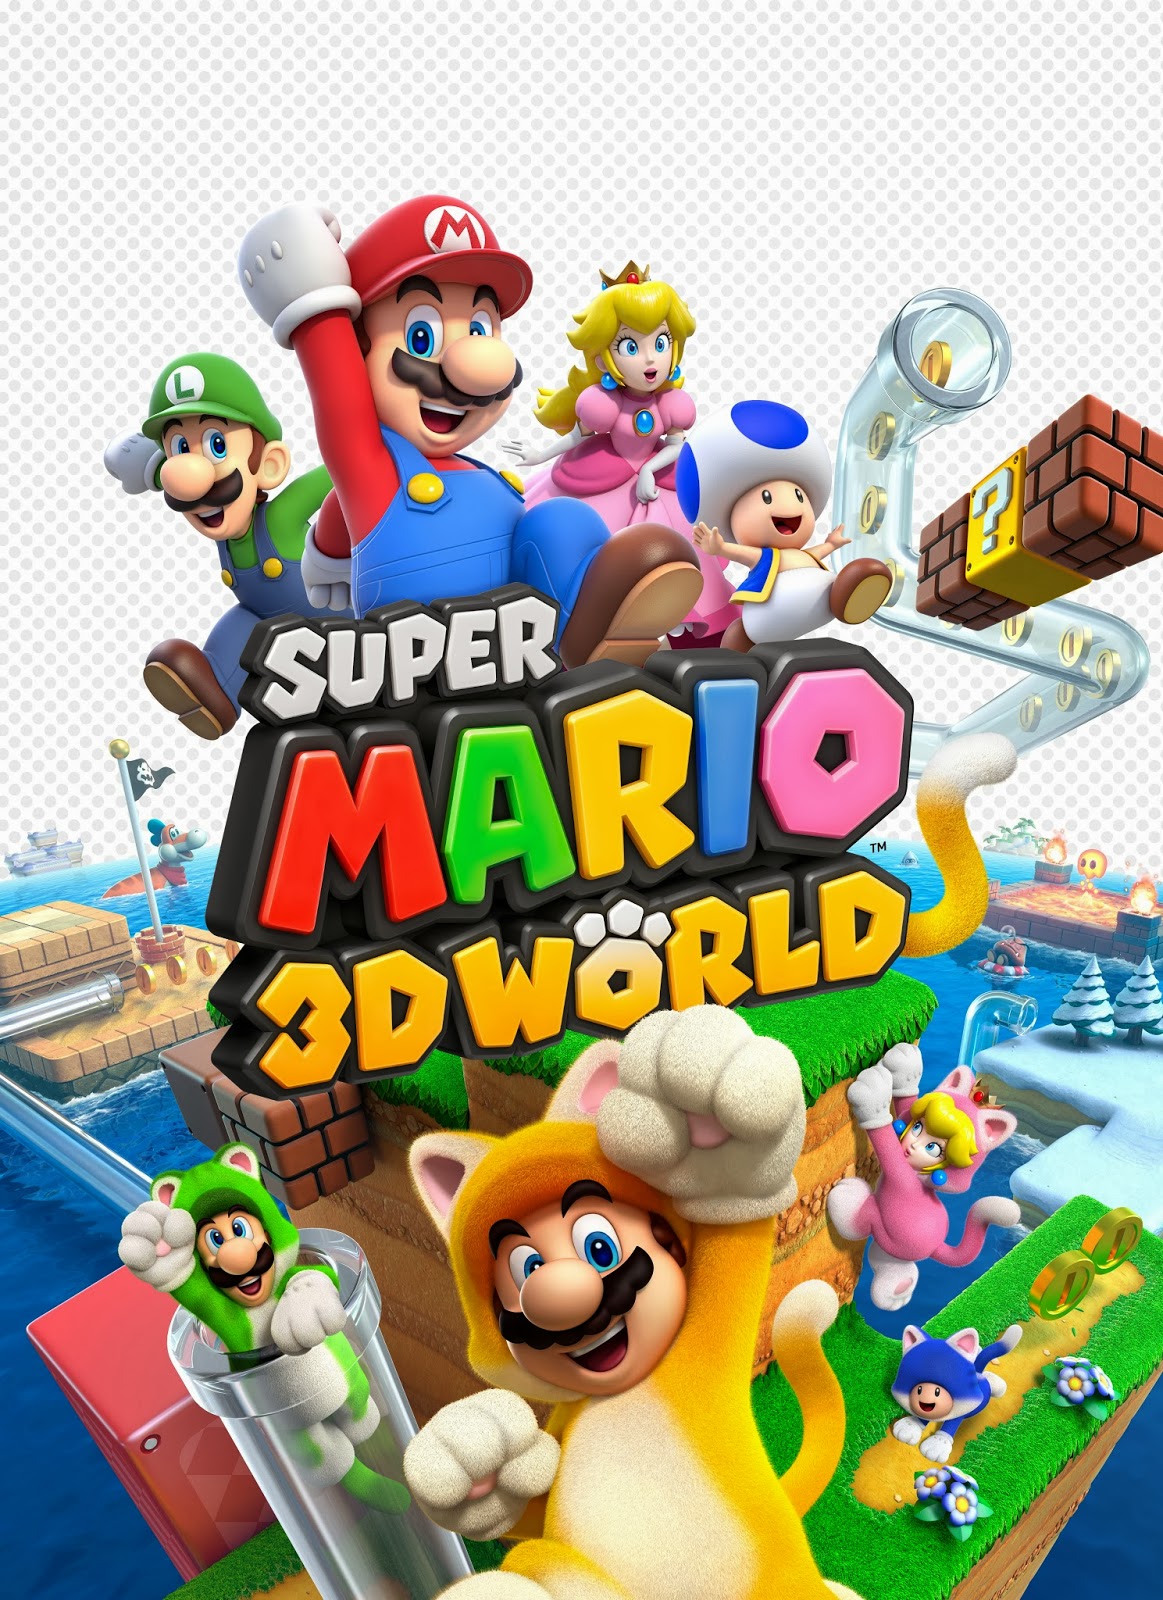 Super mario 3d world download windows 7